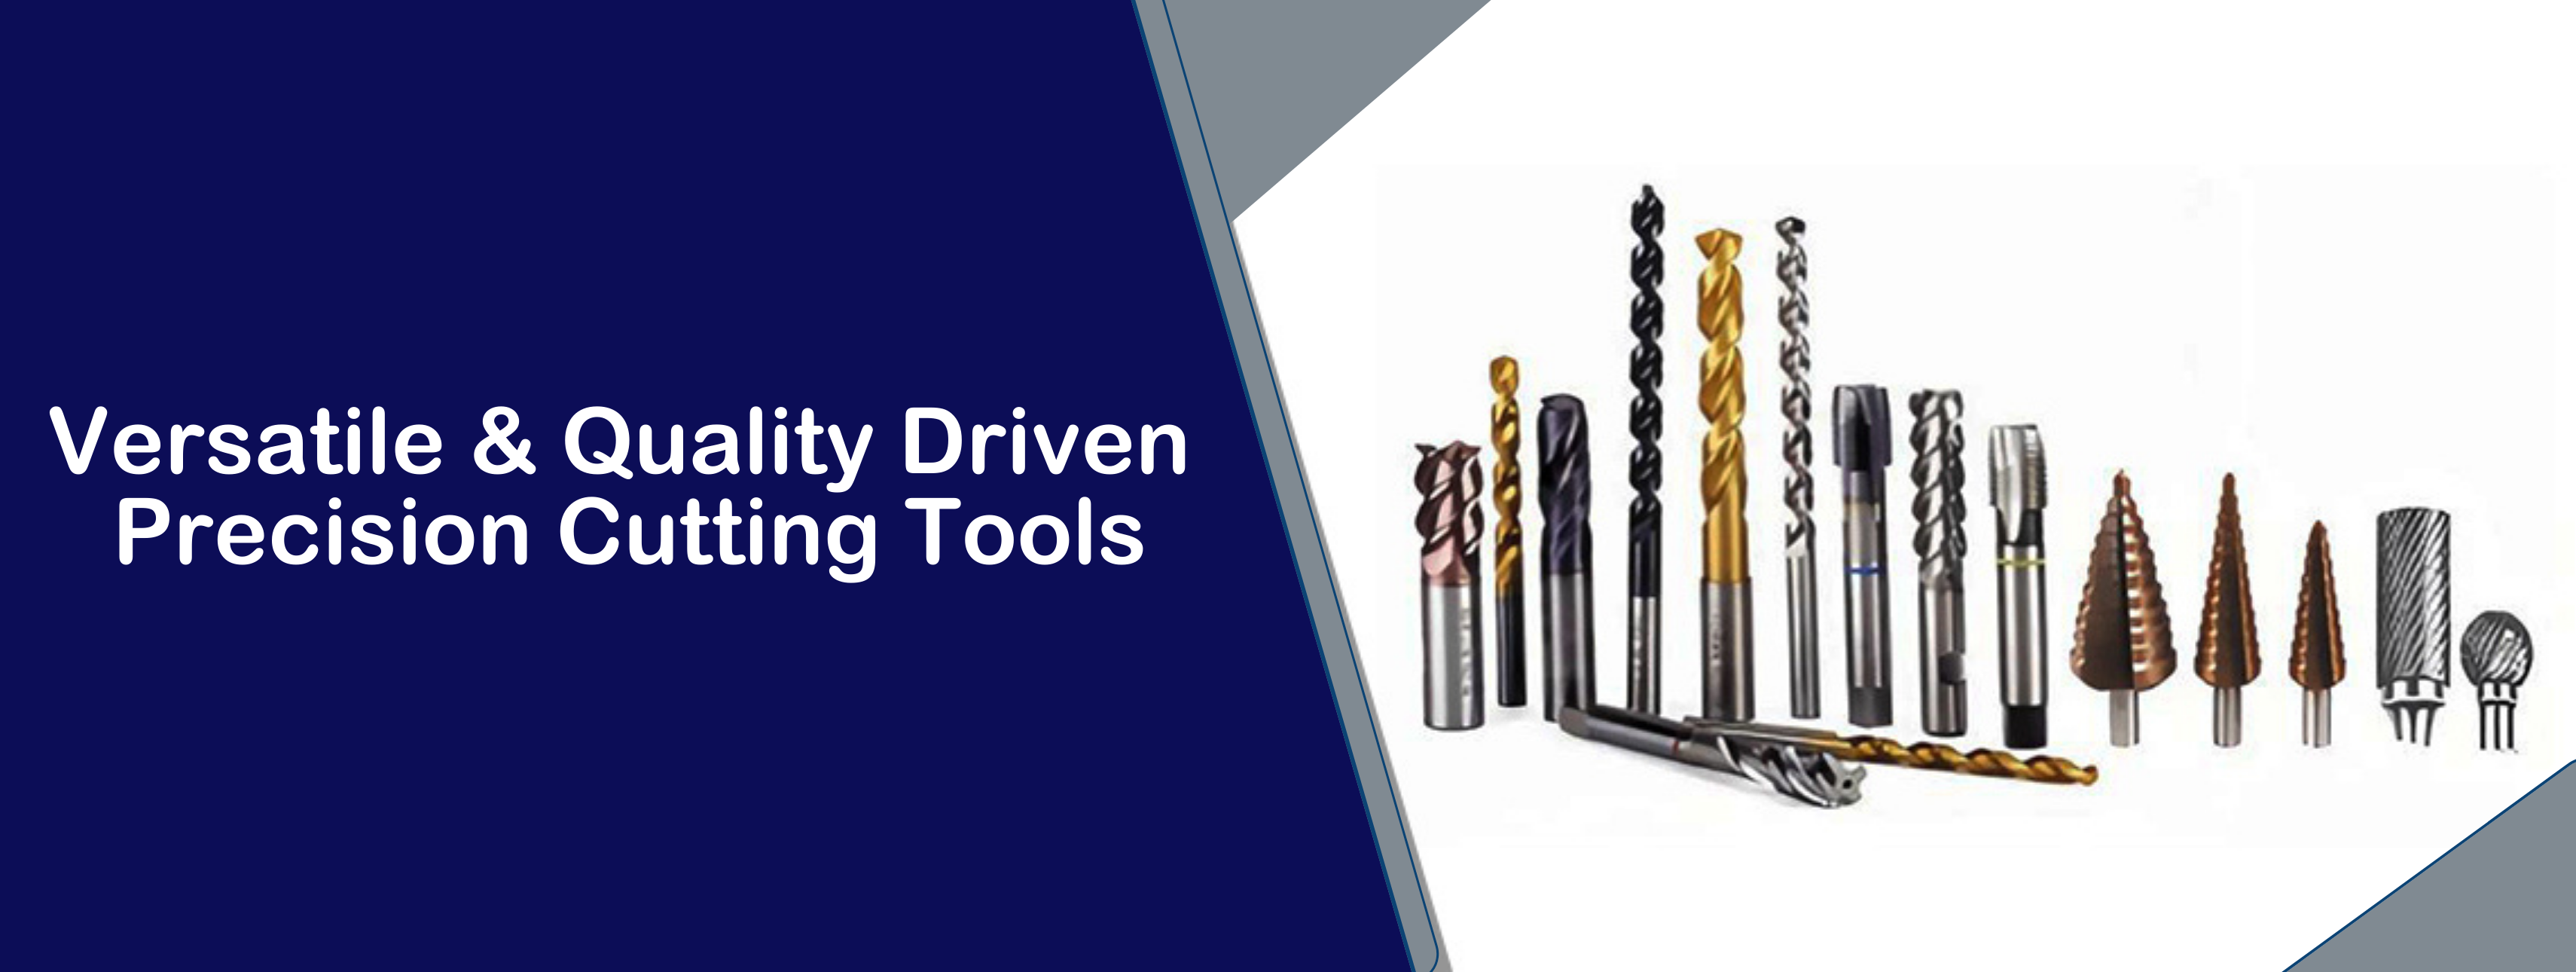 Versatile & Quality Driven Precision Cutting Tools